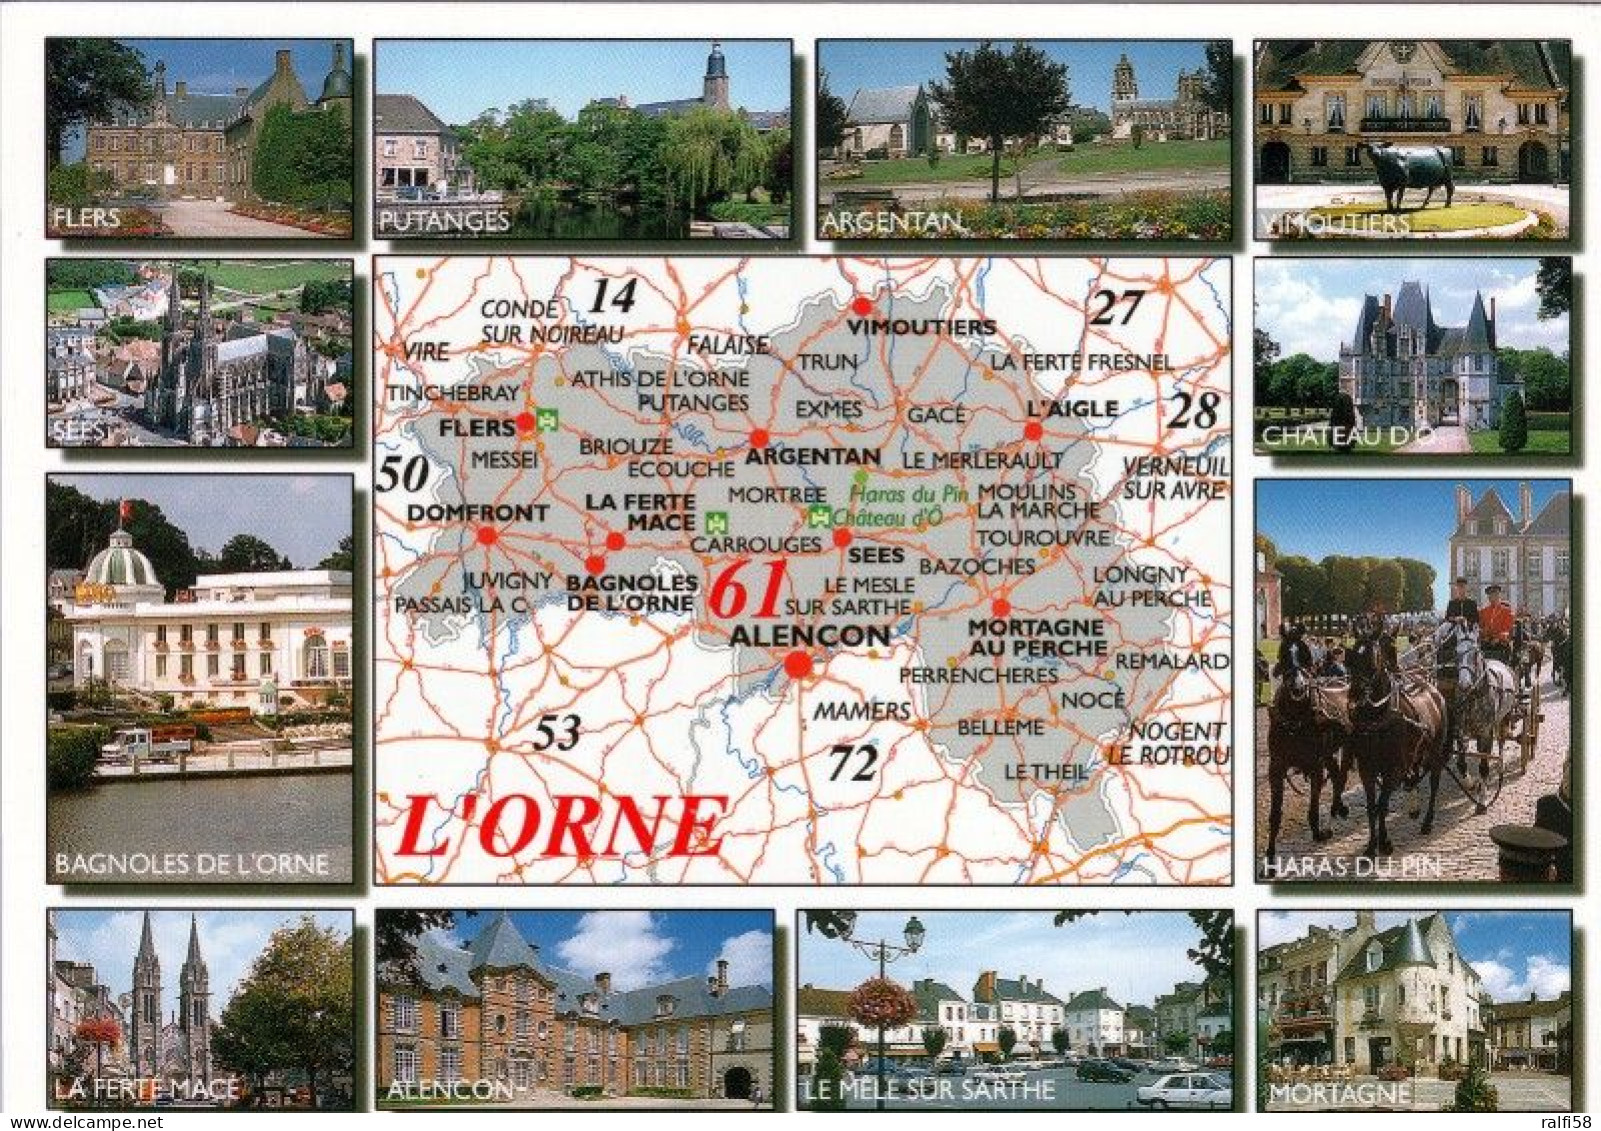 1 Map Of France * 1 Ansichtskarte Mit Der Landkarte - Département Orne - Ordnungsnummer 61 * - Landkarten